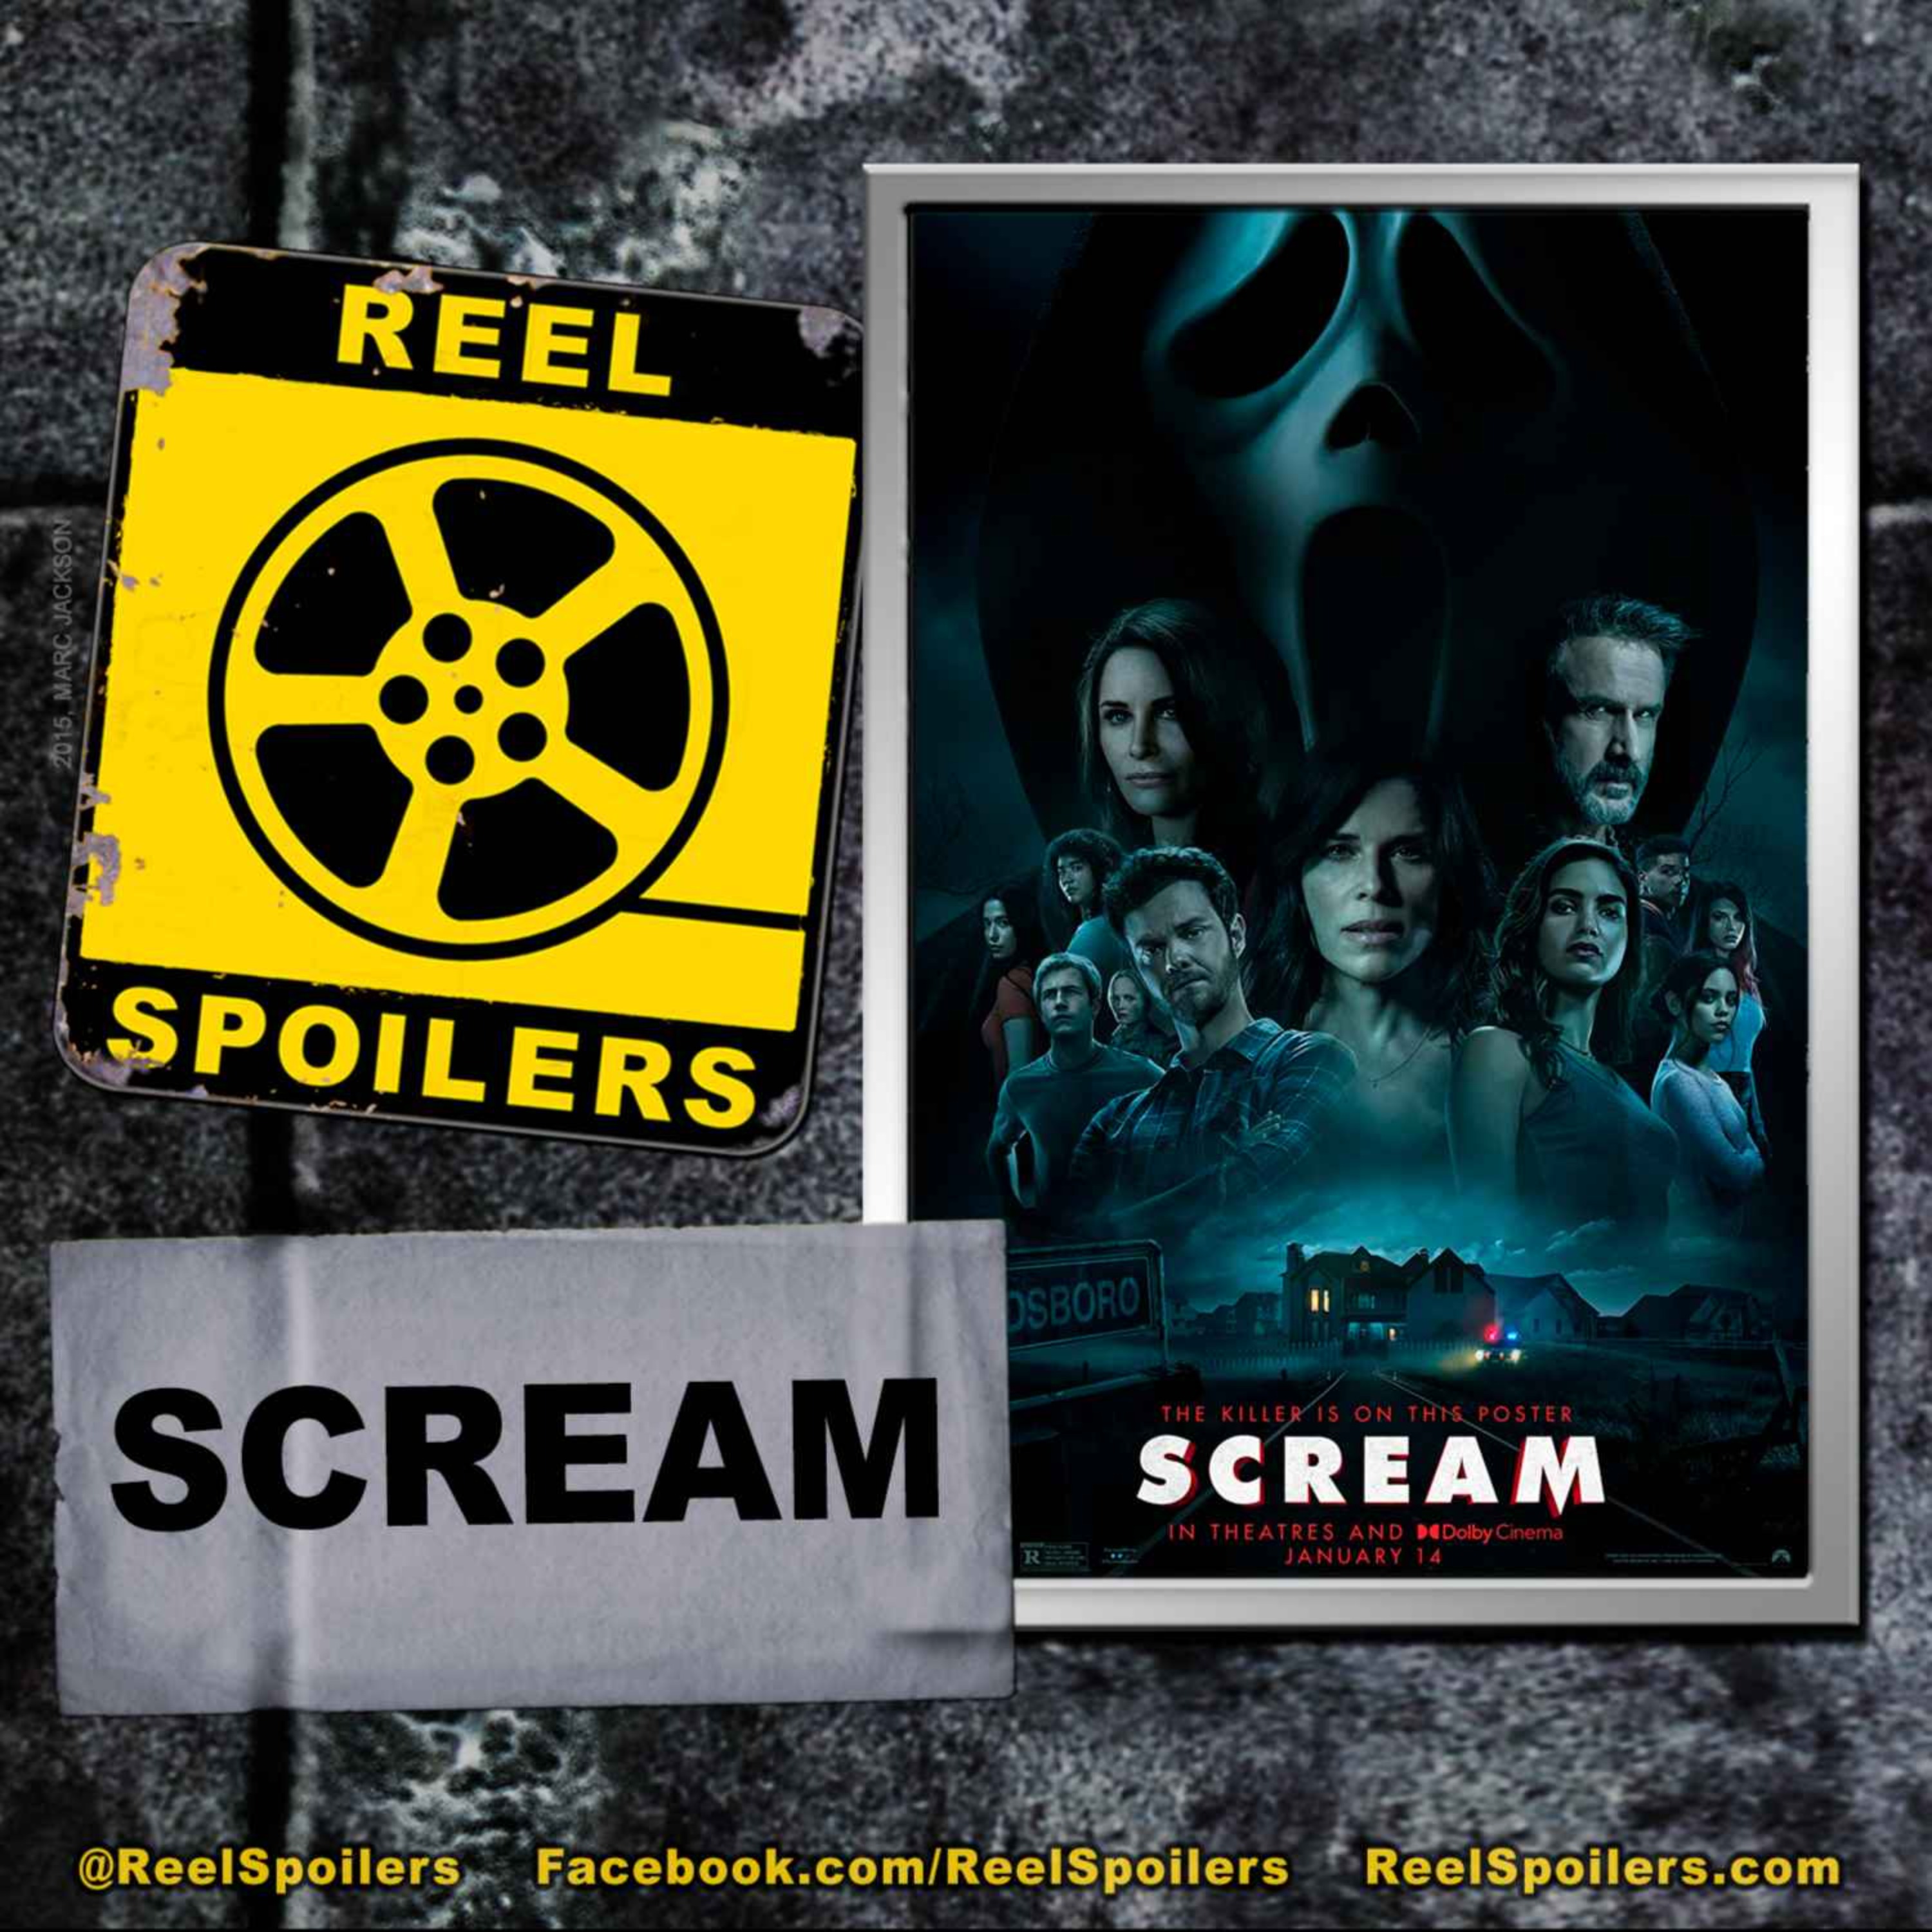 SCREAM (2022) Starring Neve Campbell, Courteney Cox, David Arquette Image